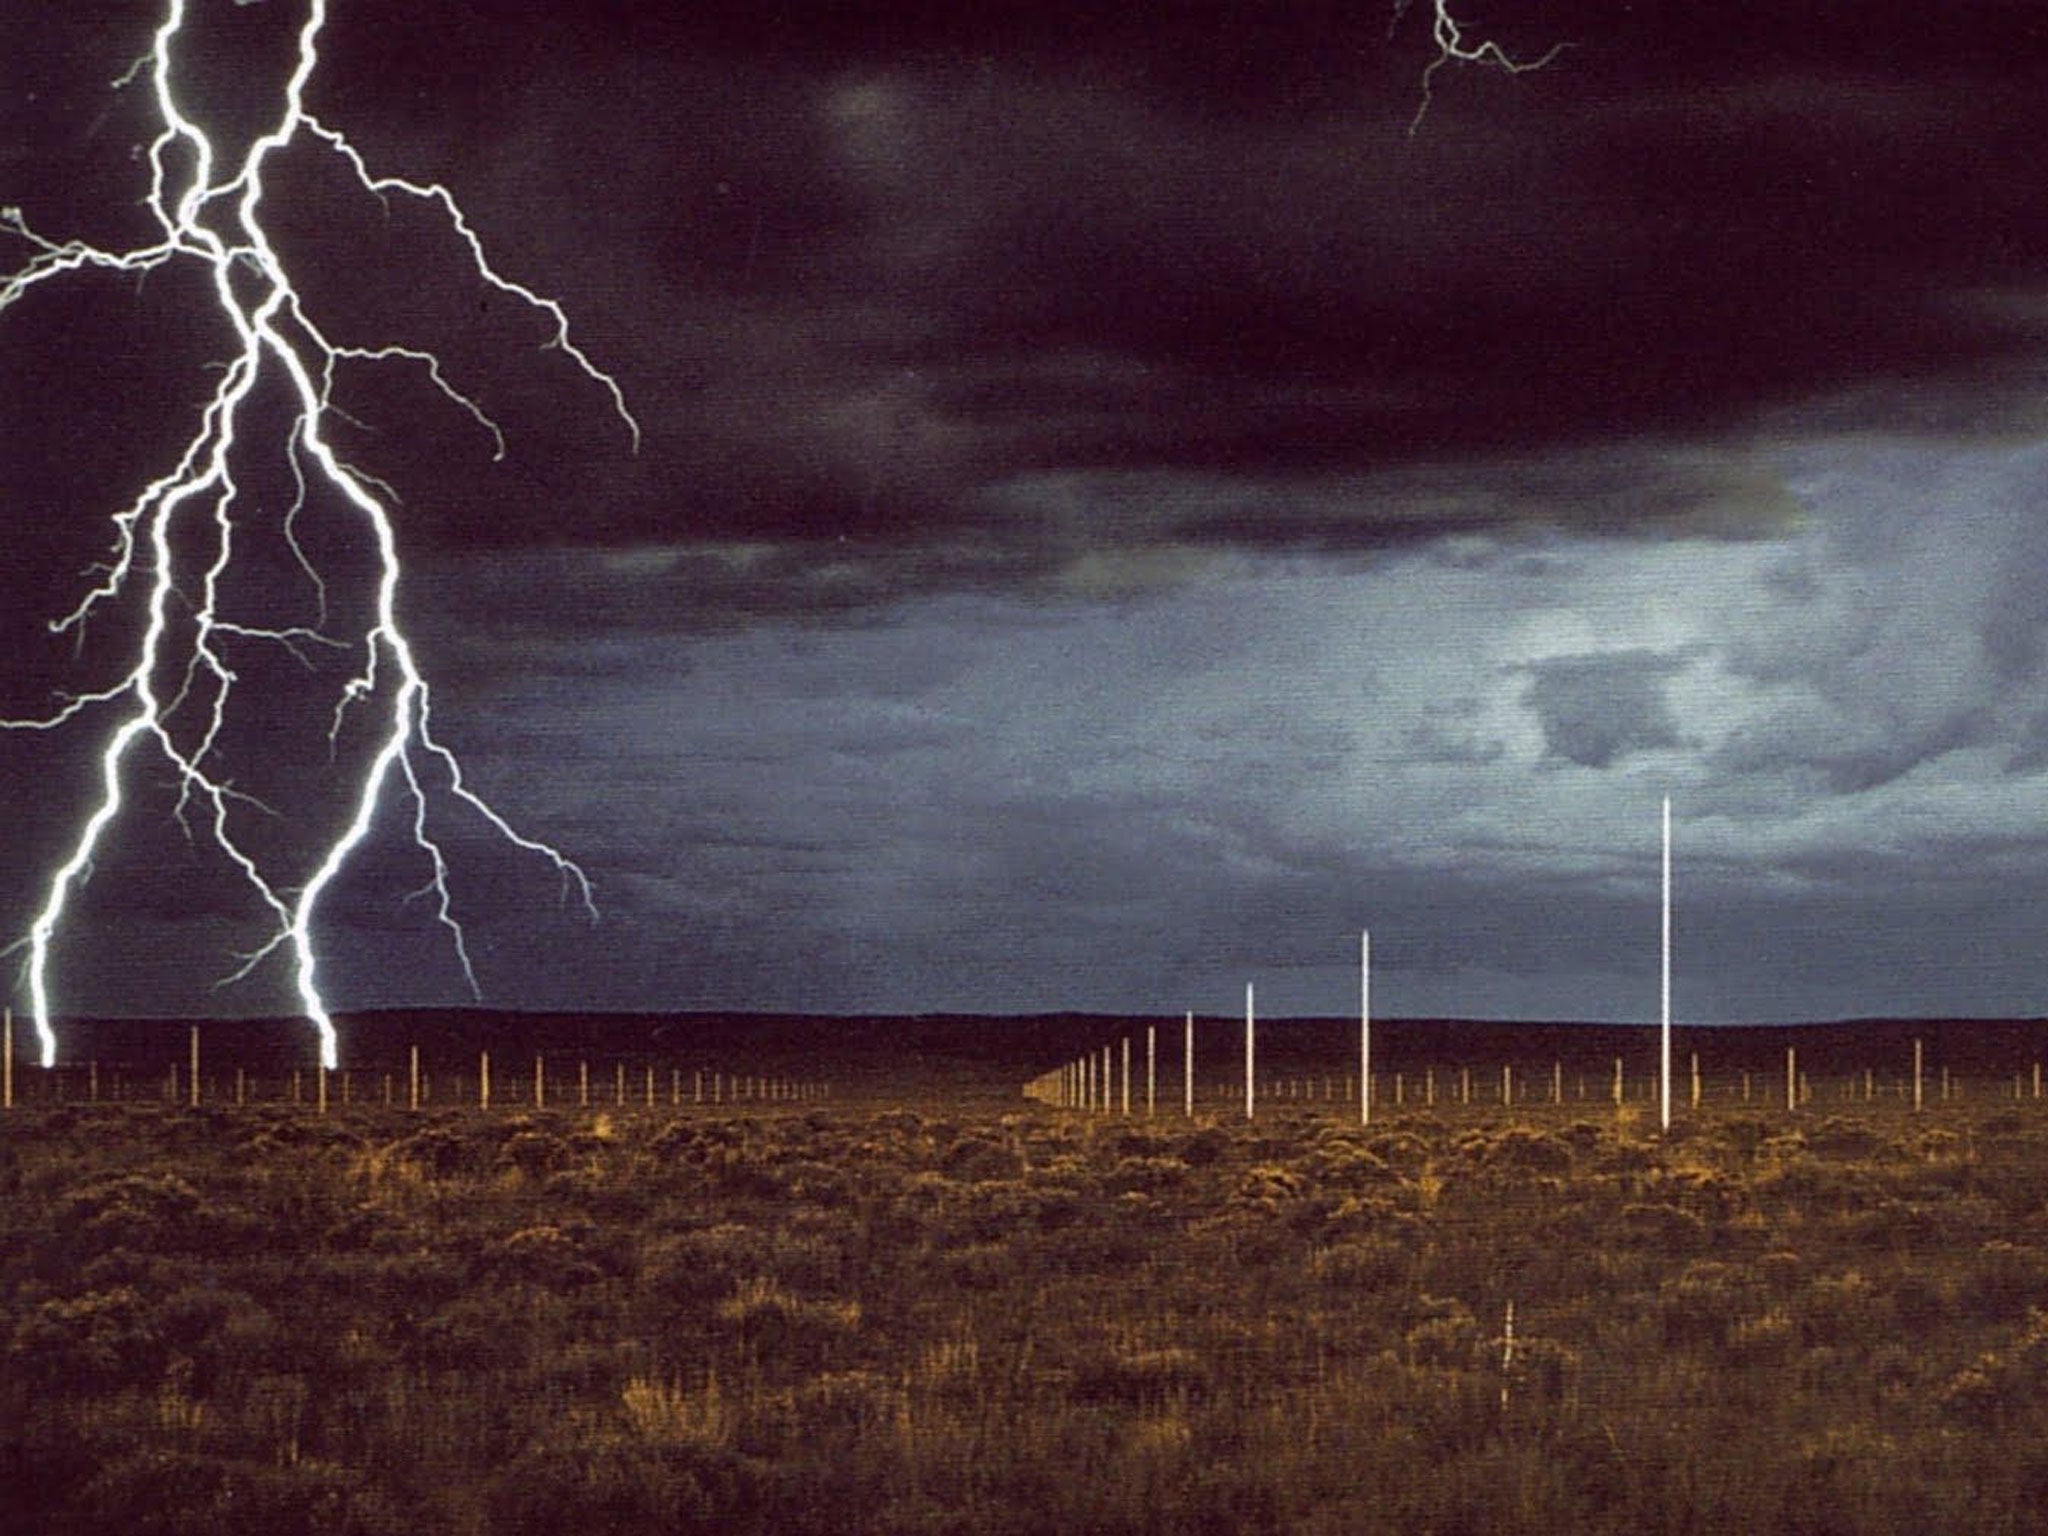 De Maria's 'Lightning Field' in New Mexico